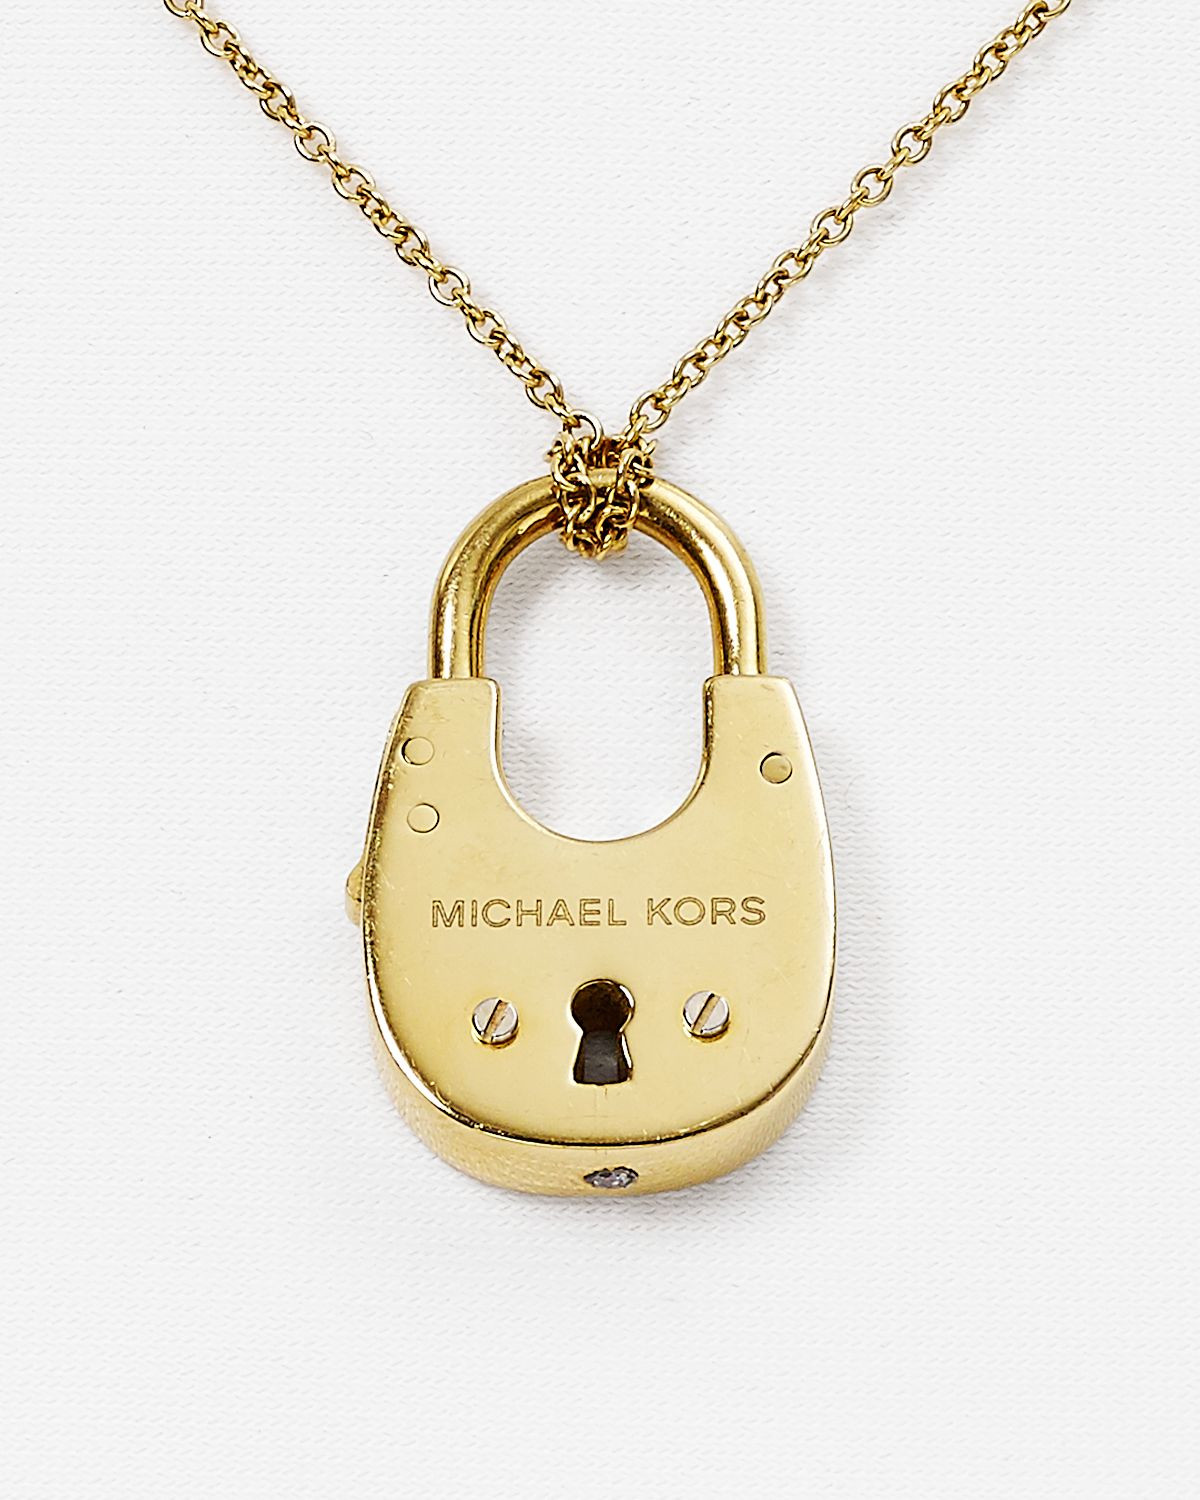 Michael Kors Lock Necklace
 Lyst Michael Kors Padlock Pendant Necklace 16" in Metallic